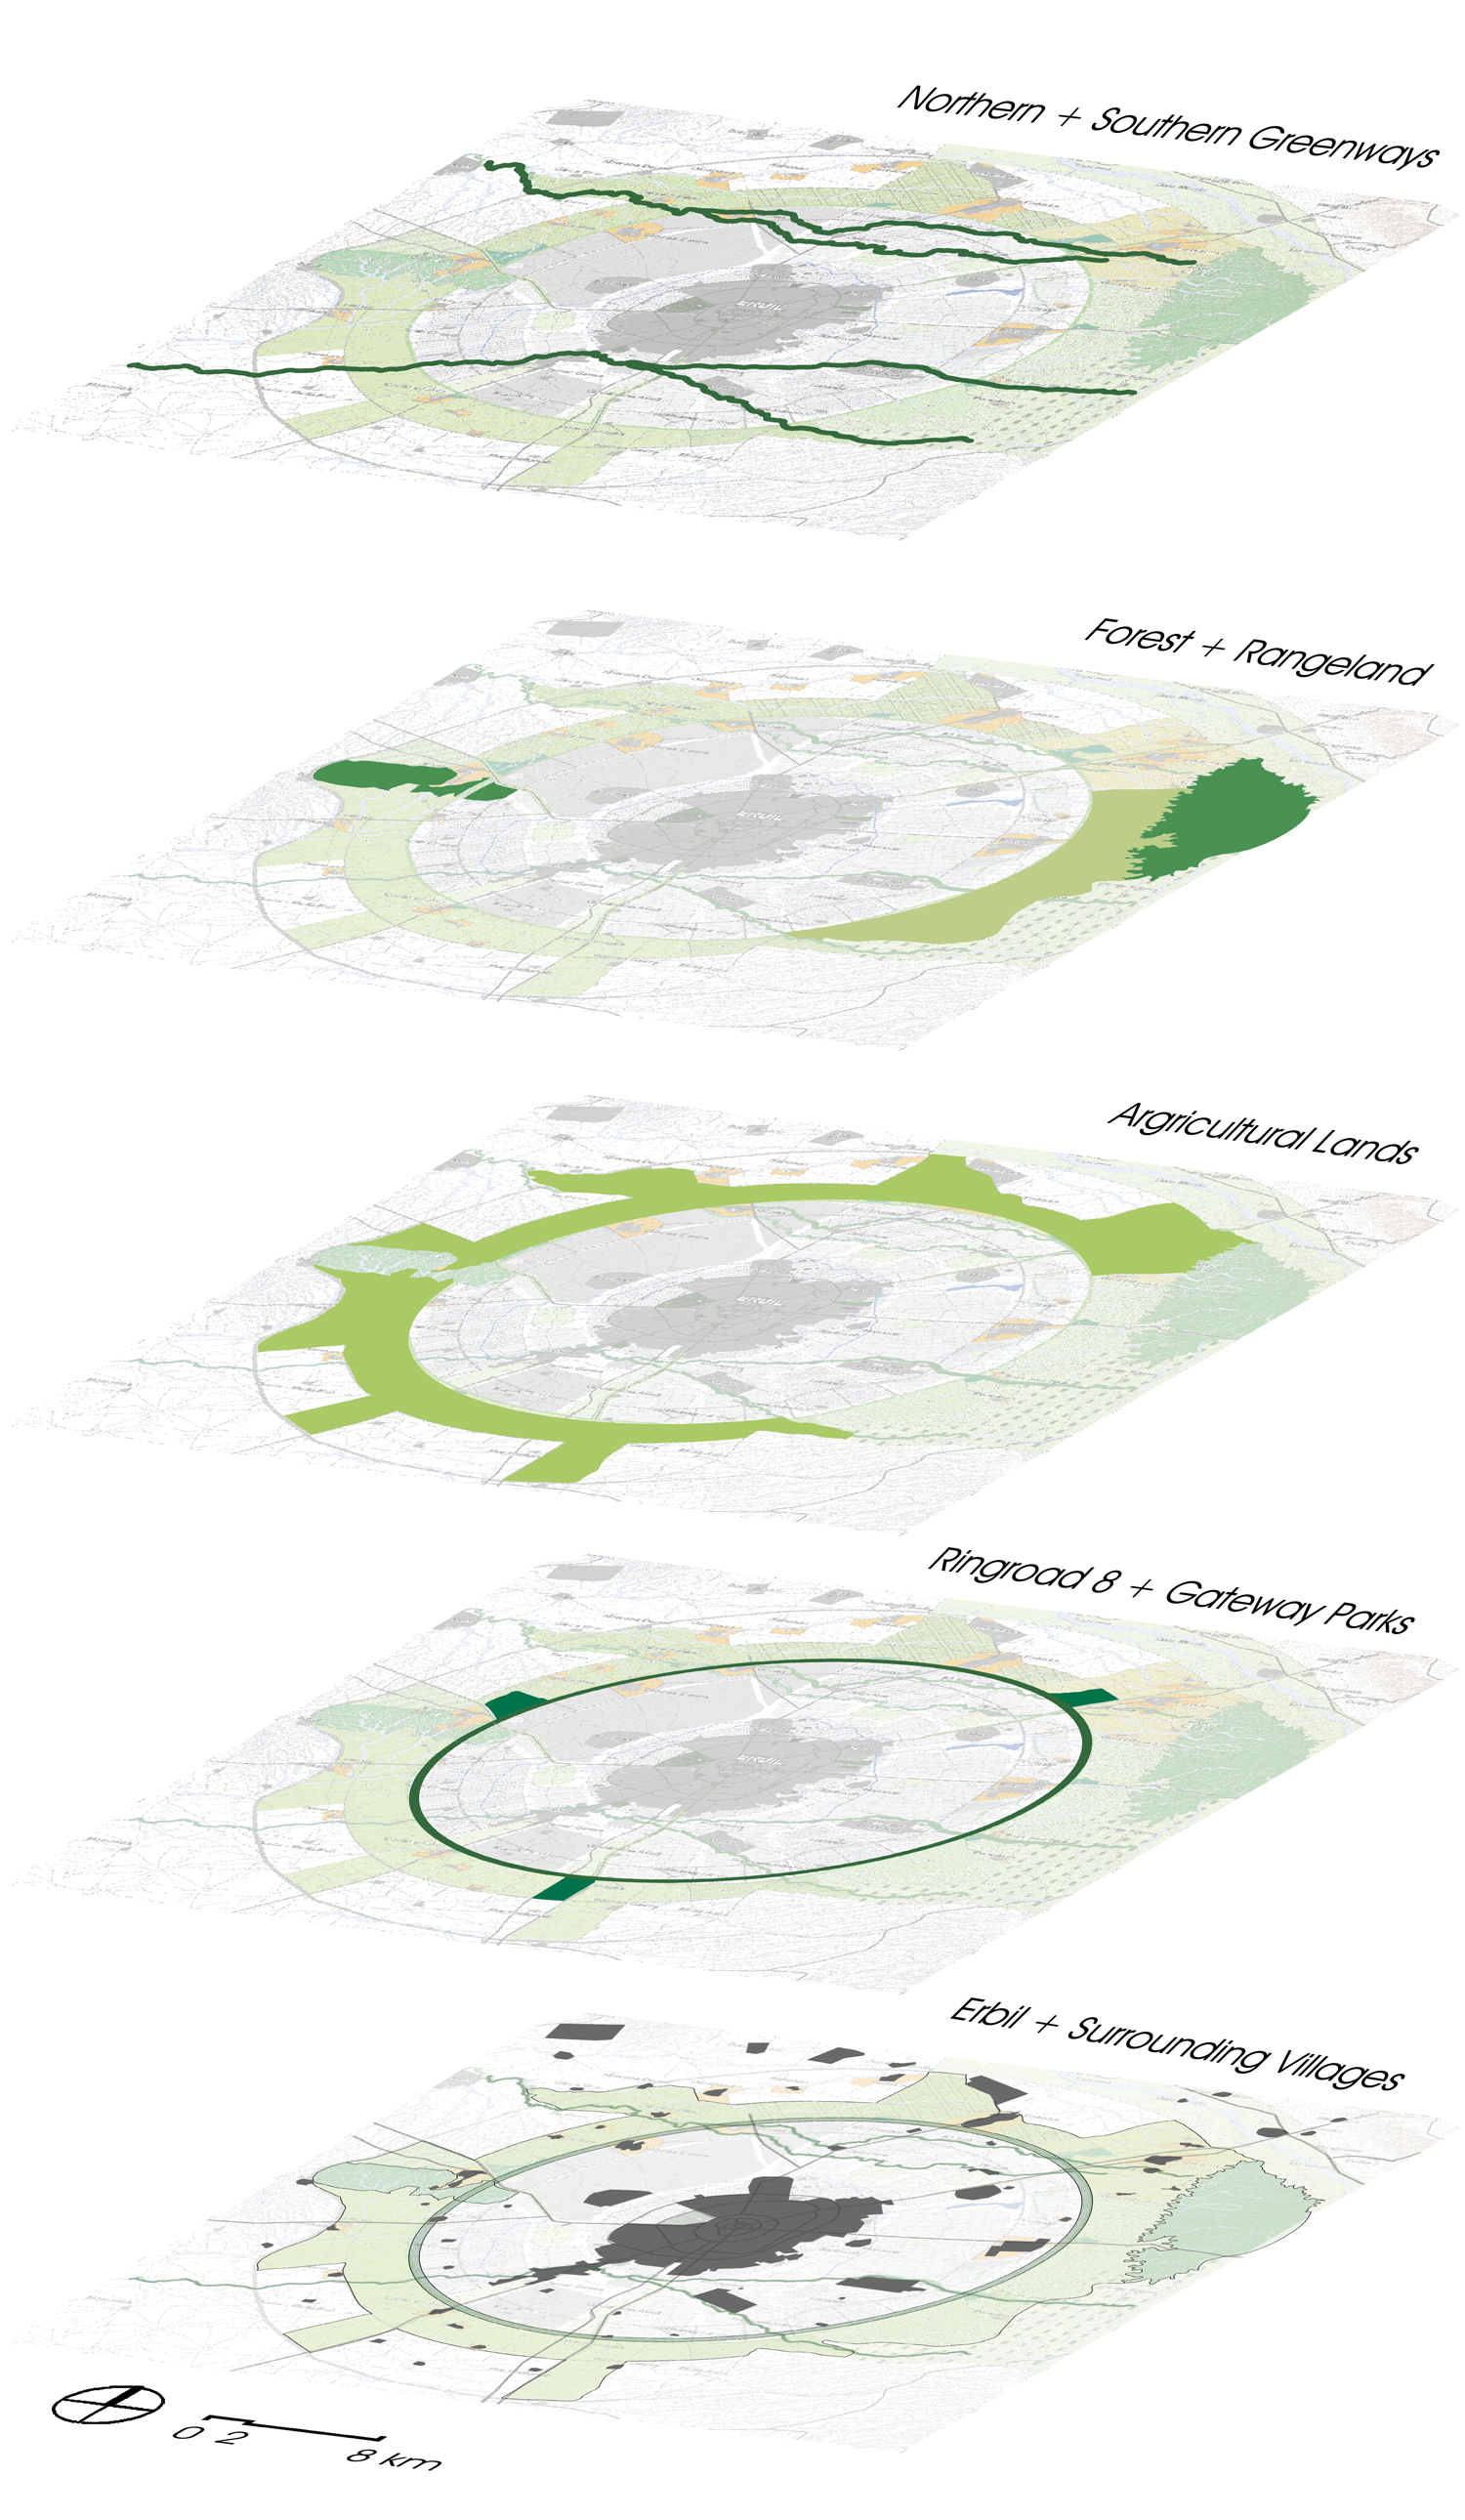 Exploded diagram of Erbil Greenbelt landscape master plan layers